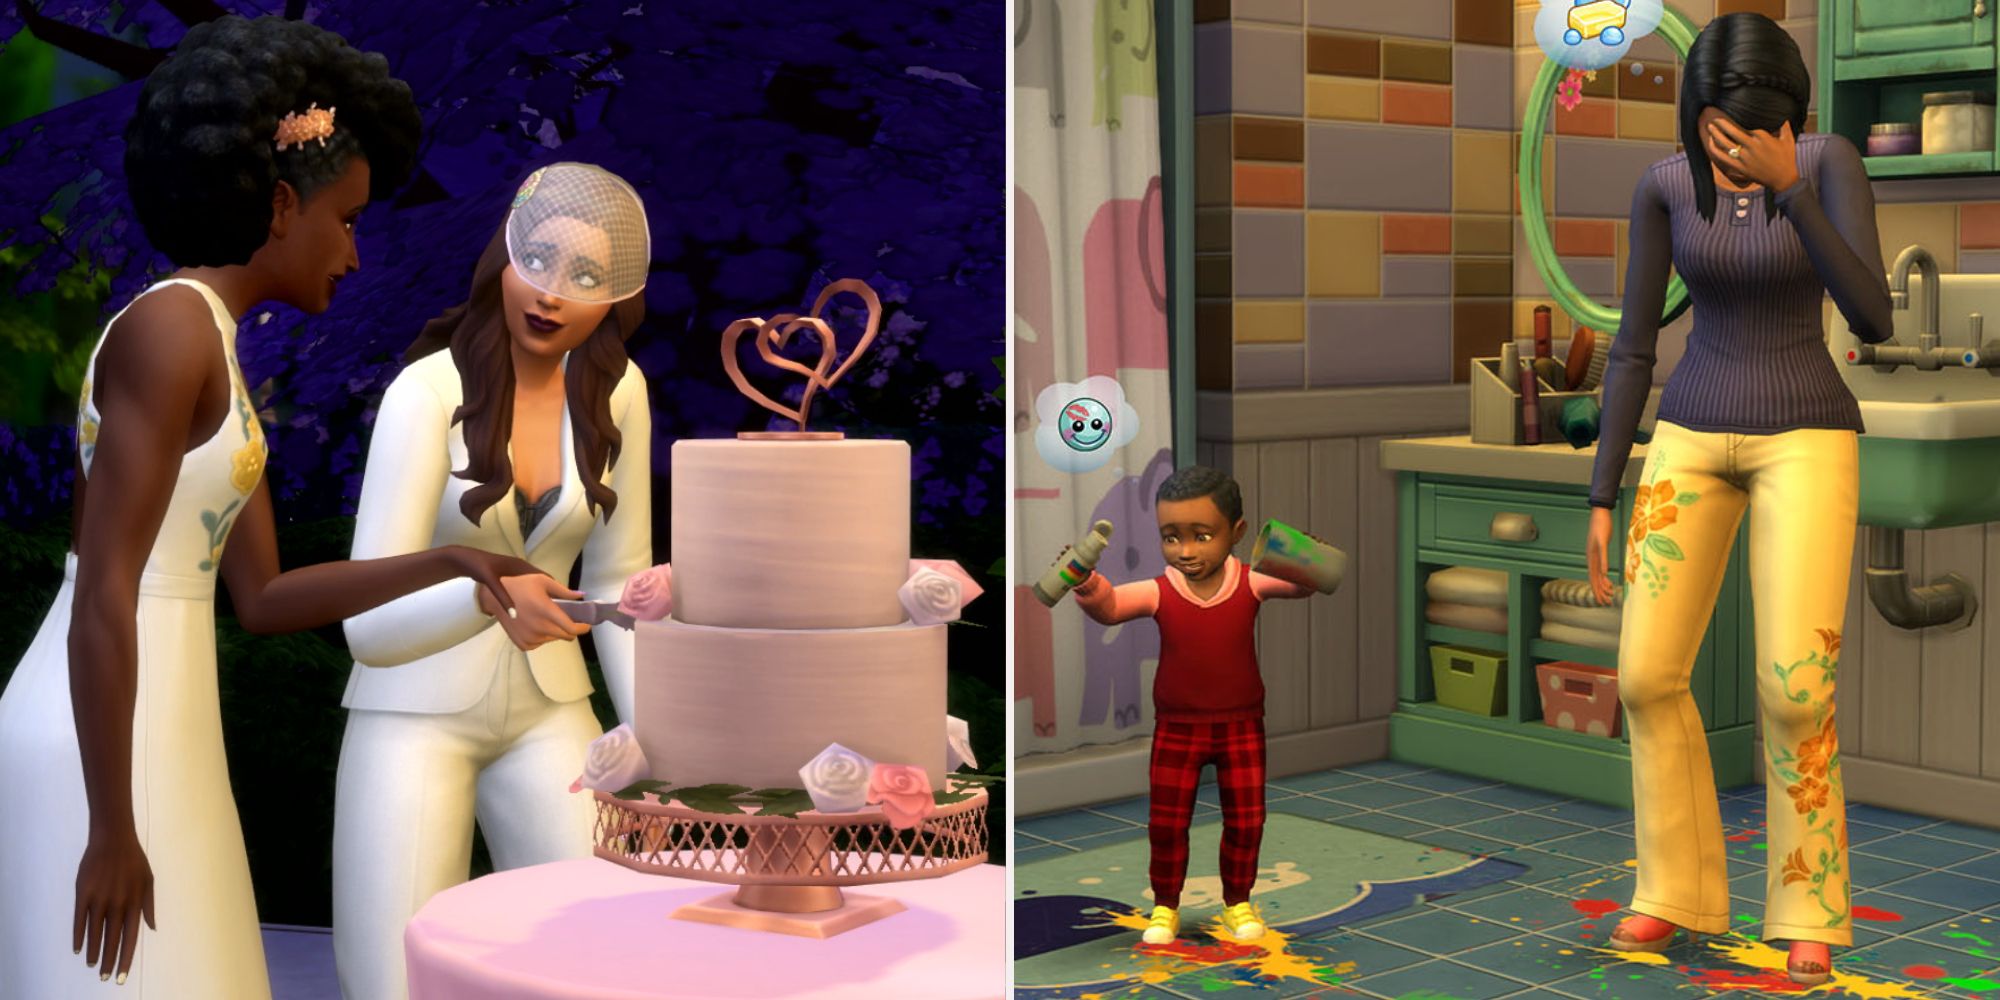 Sims 4 game packs my wedding stories 2 sims cutting cake and parenthood kid causing mess